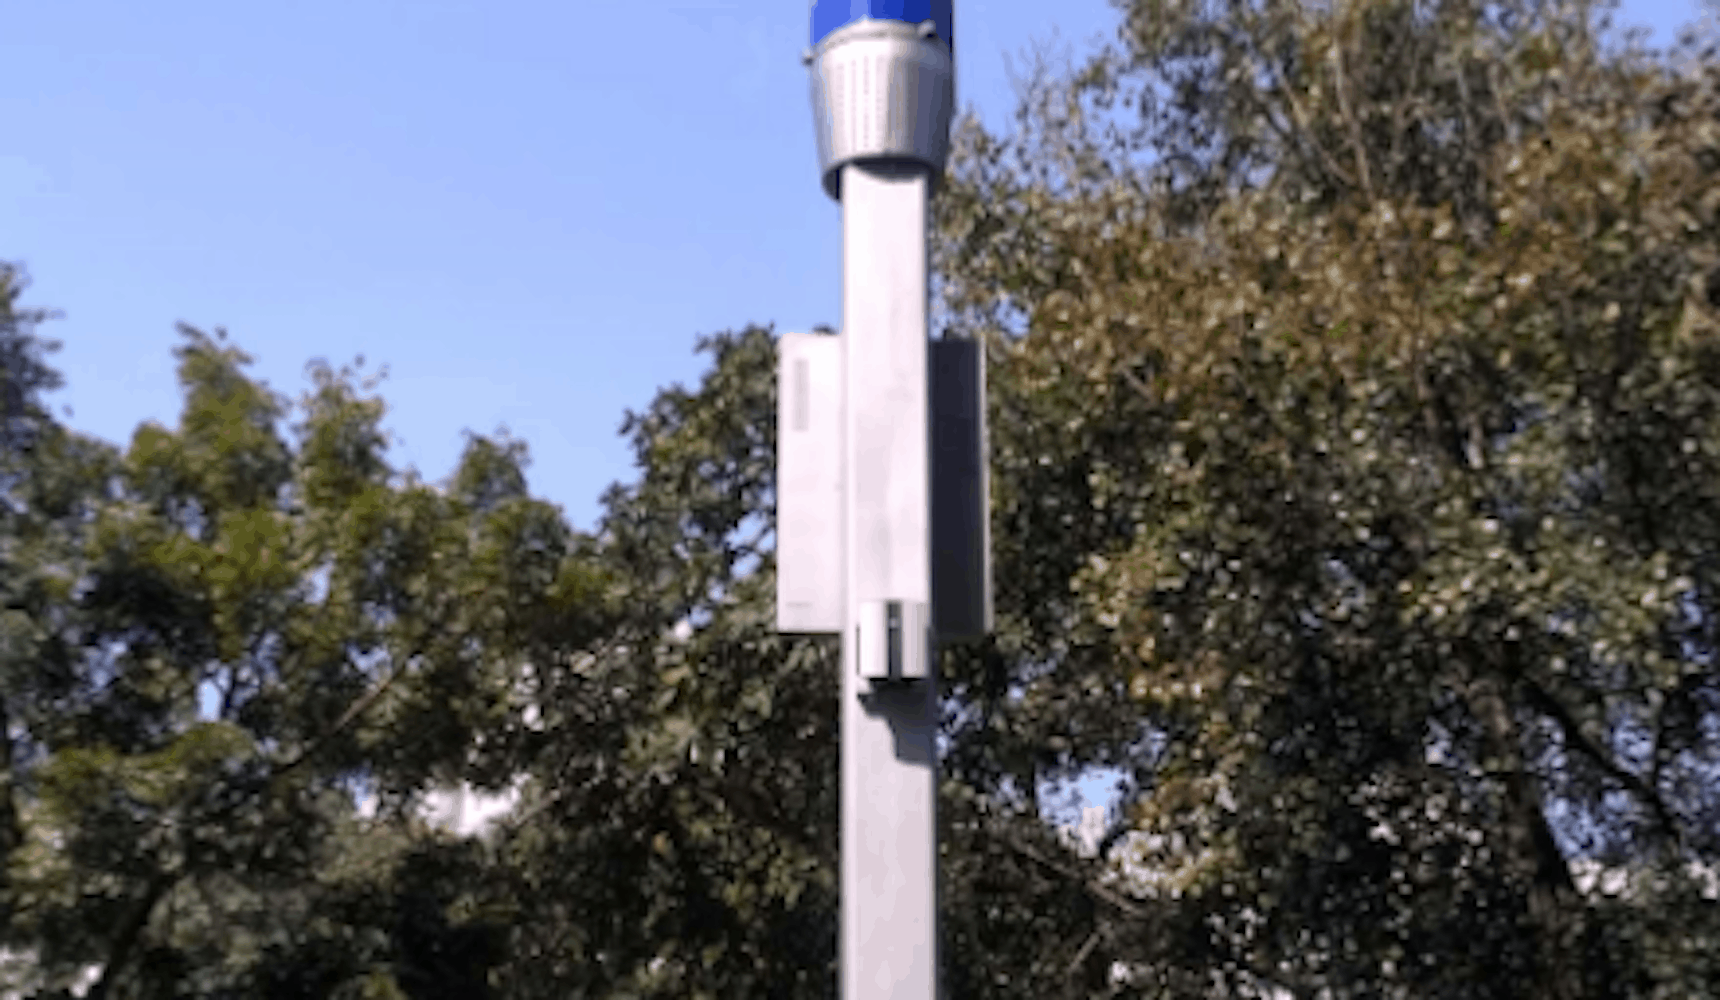 Flexsol city air monitoring